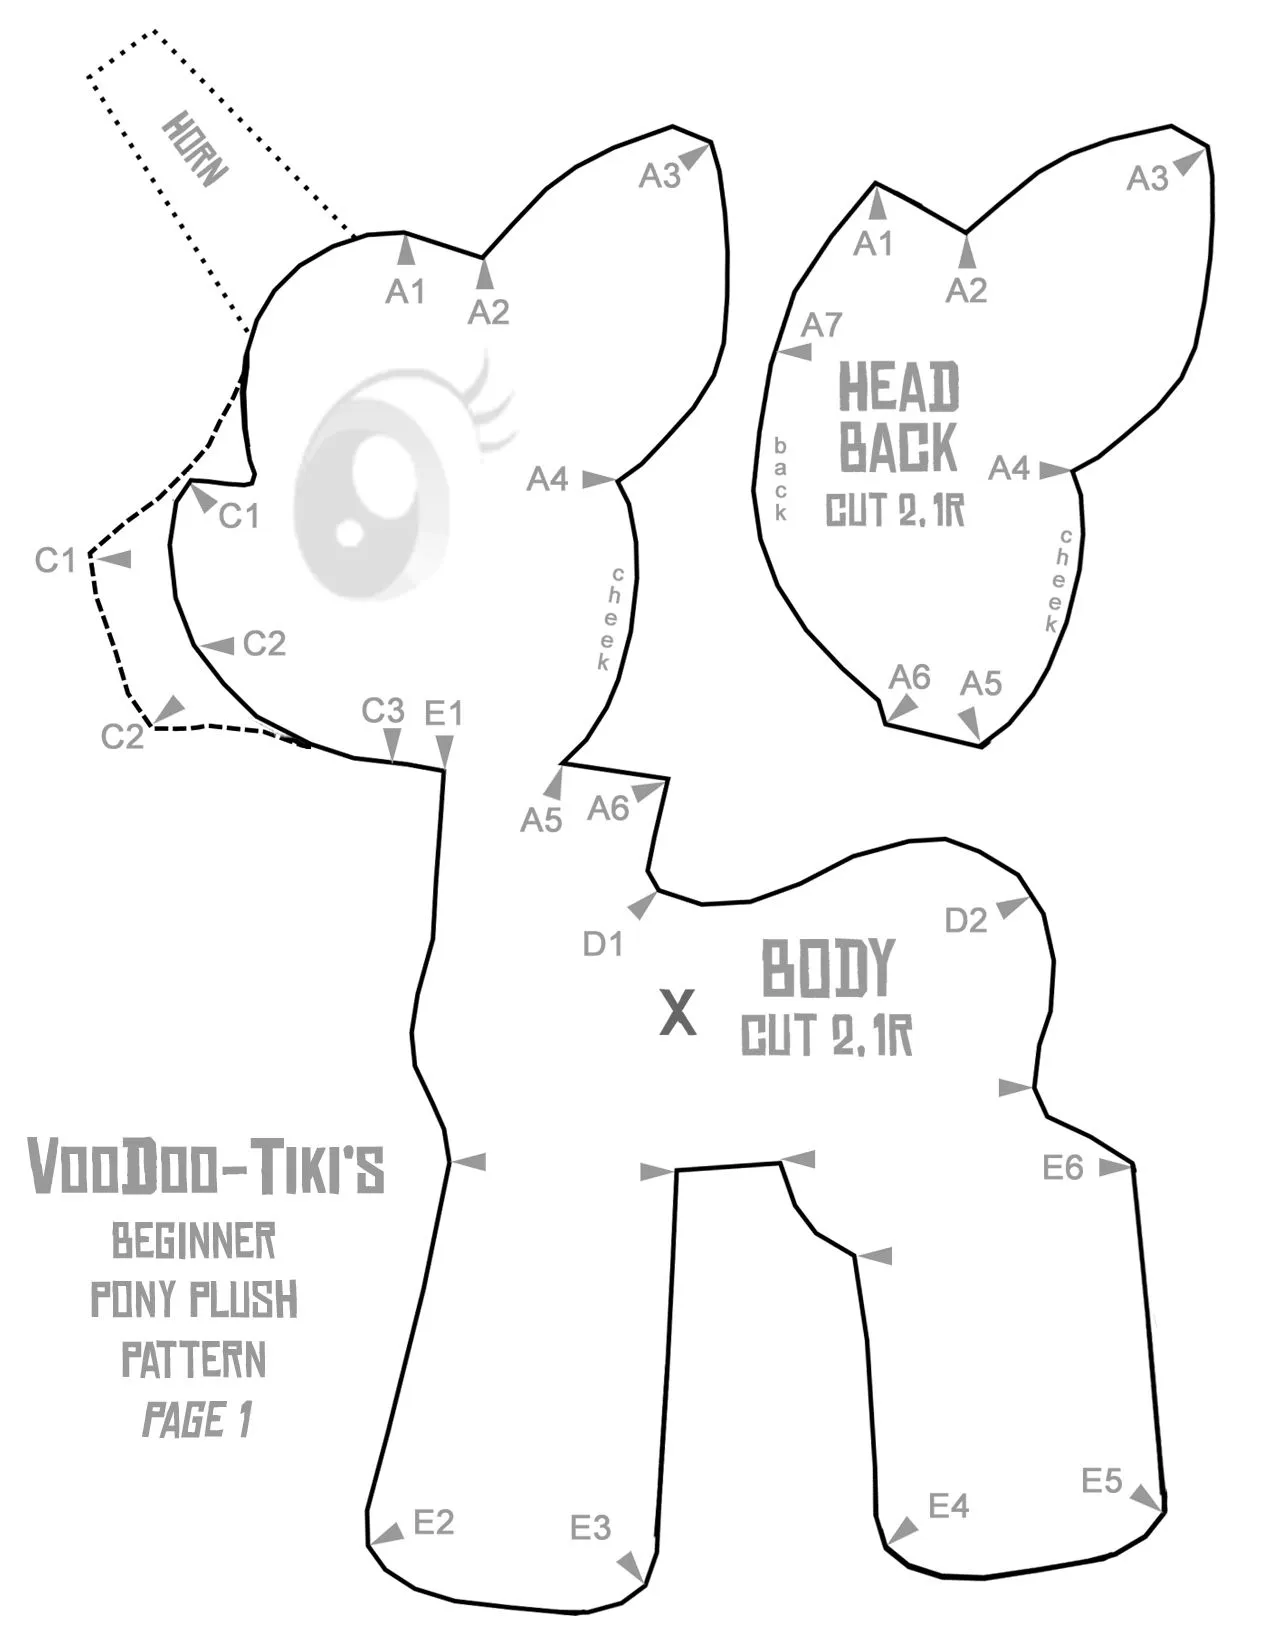 Beginner Pony Plushie Pattern 1 by Voodoo-Tiki on DeviantArt